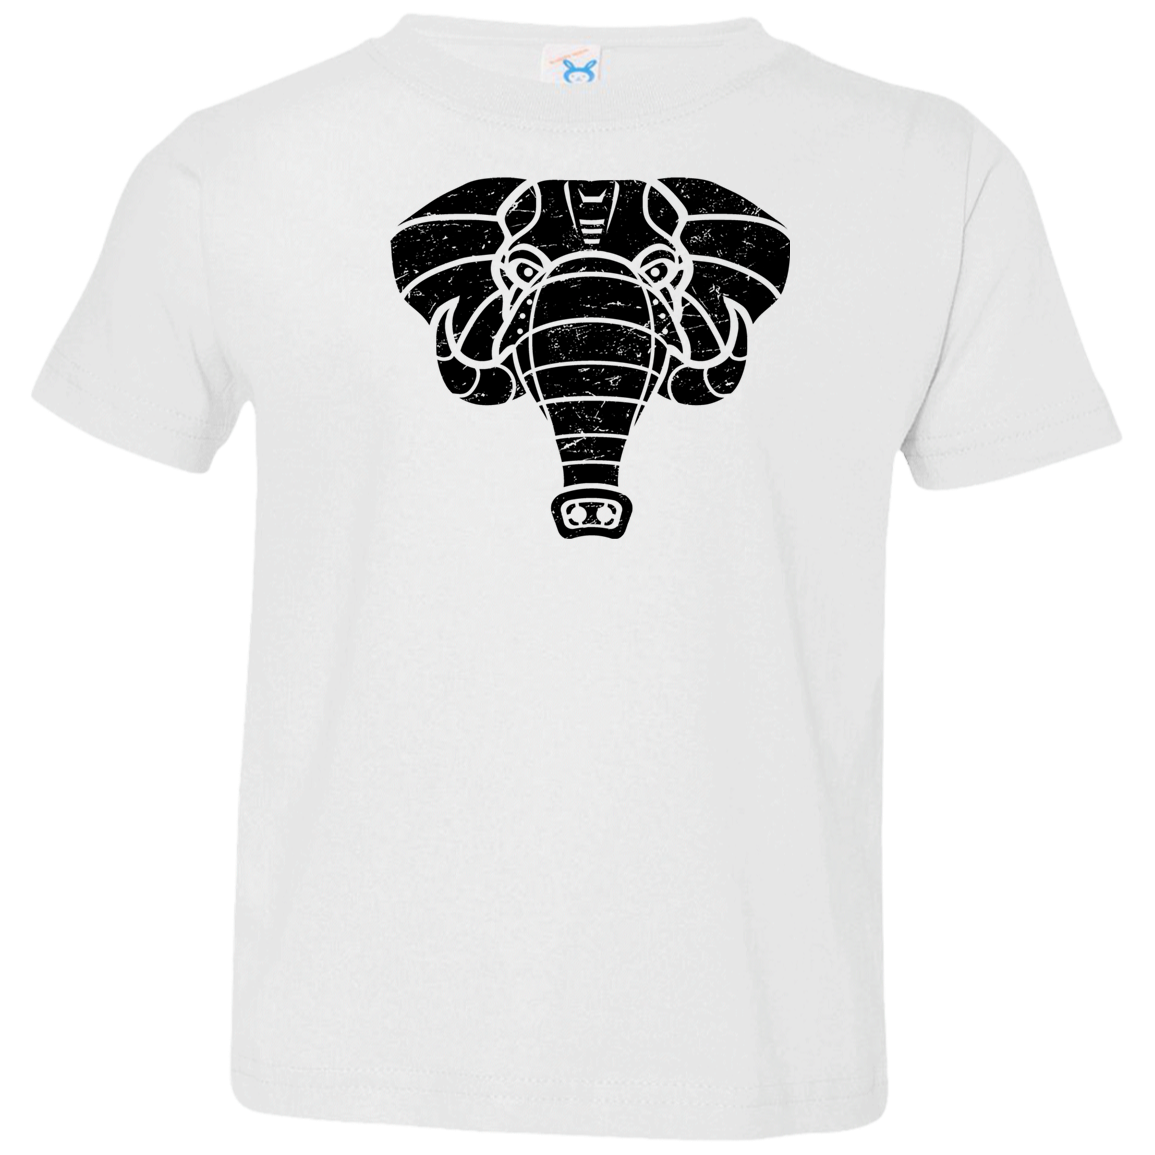 Black Distressed Emblem T-Shirt for Toddlers (Elephant/Quake)